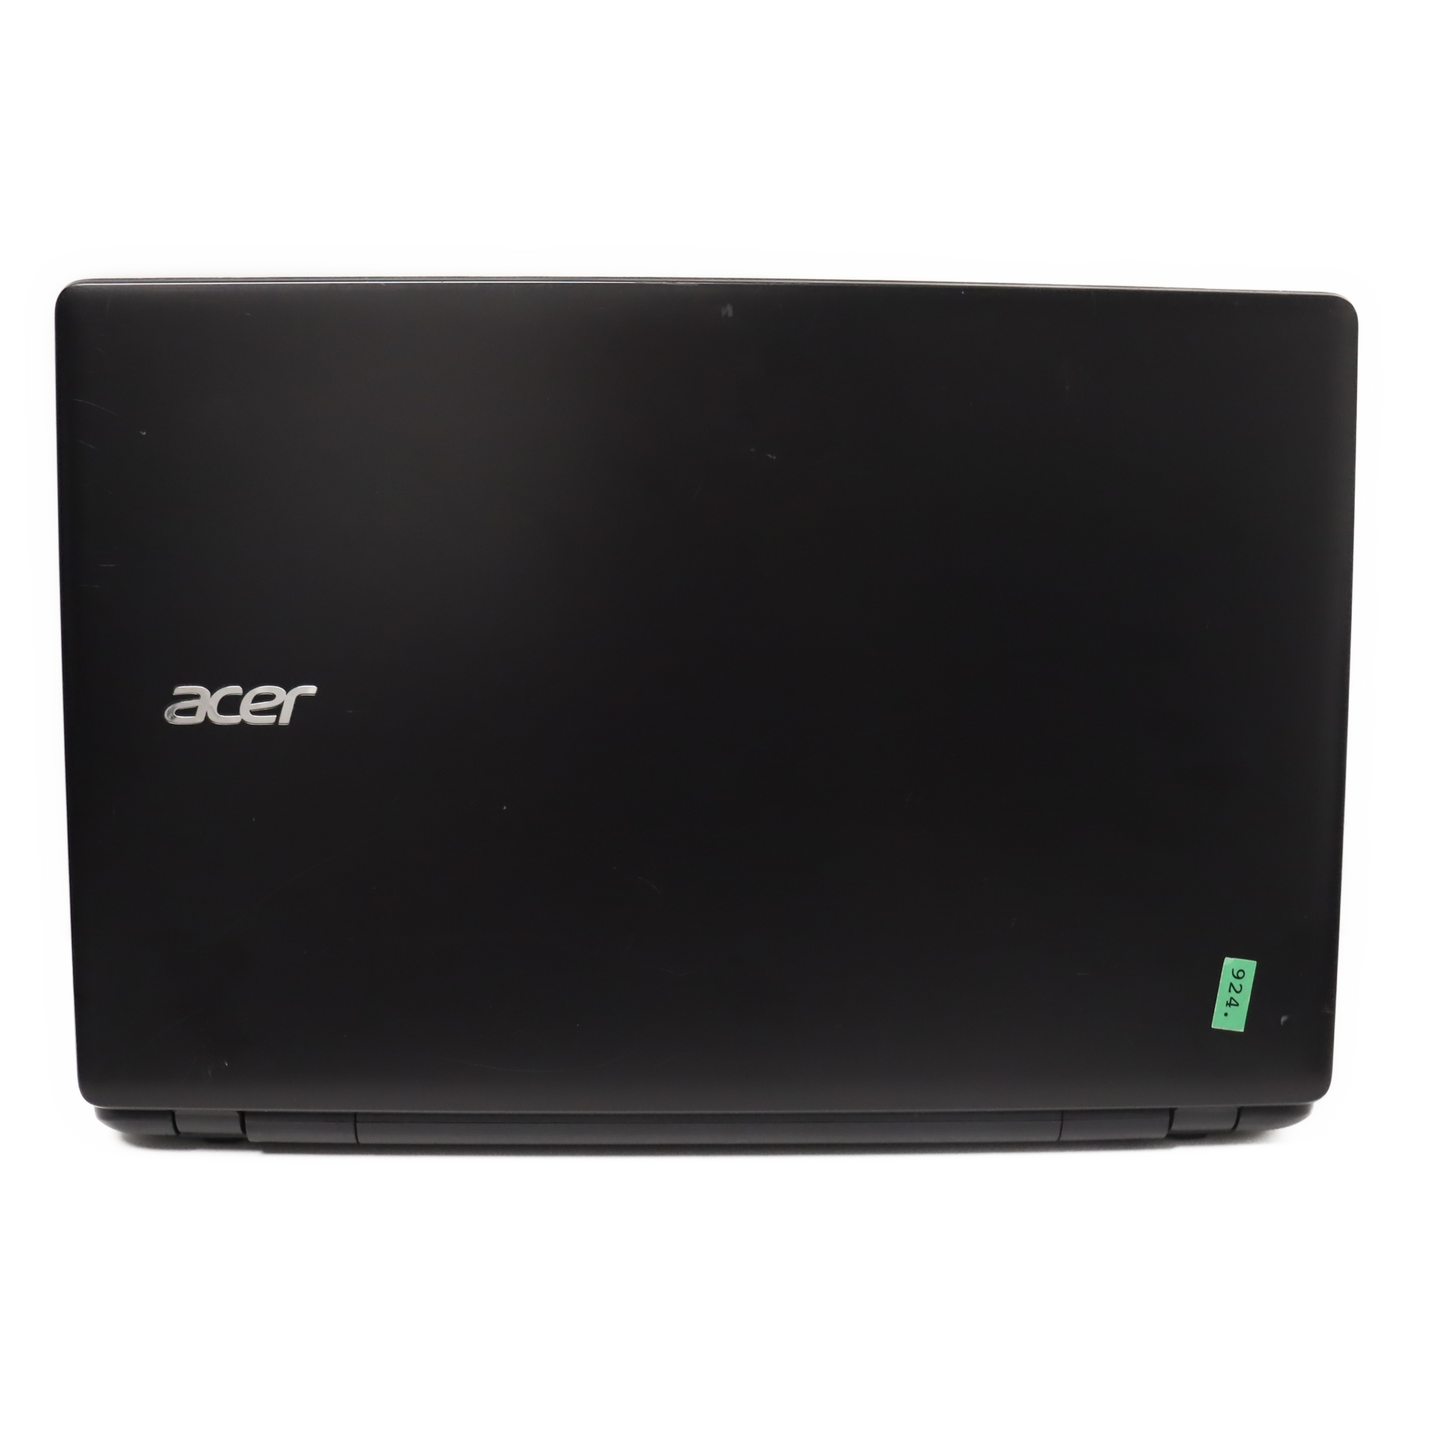 Acer E5-521 AMD A6-6310 4GB RAM 1TB HDD ohne gewährleistung zu günstig